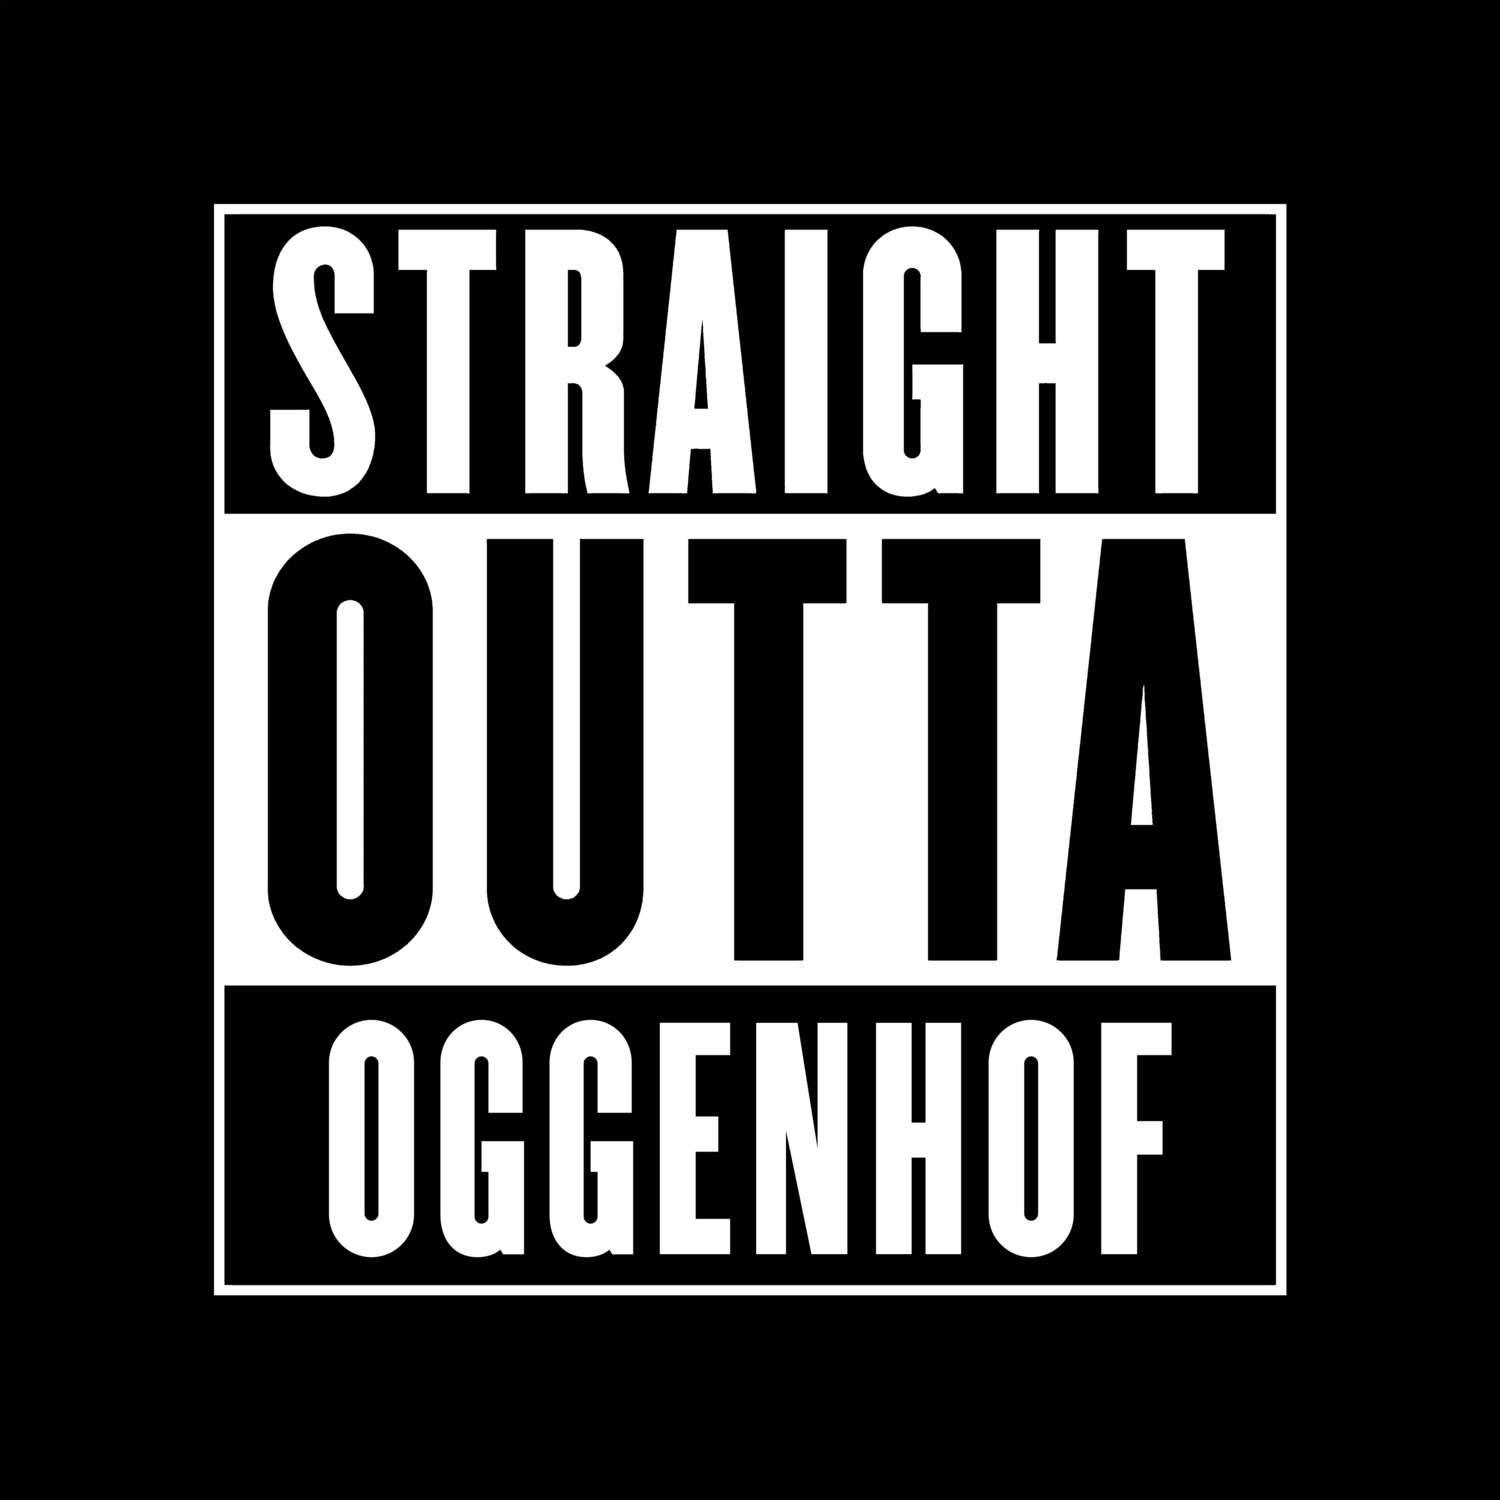 Oggenhof T-Shirt »Straight Outta«